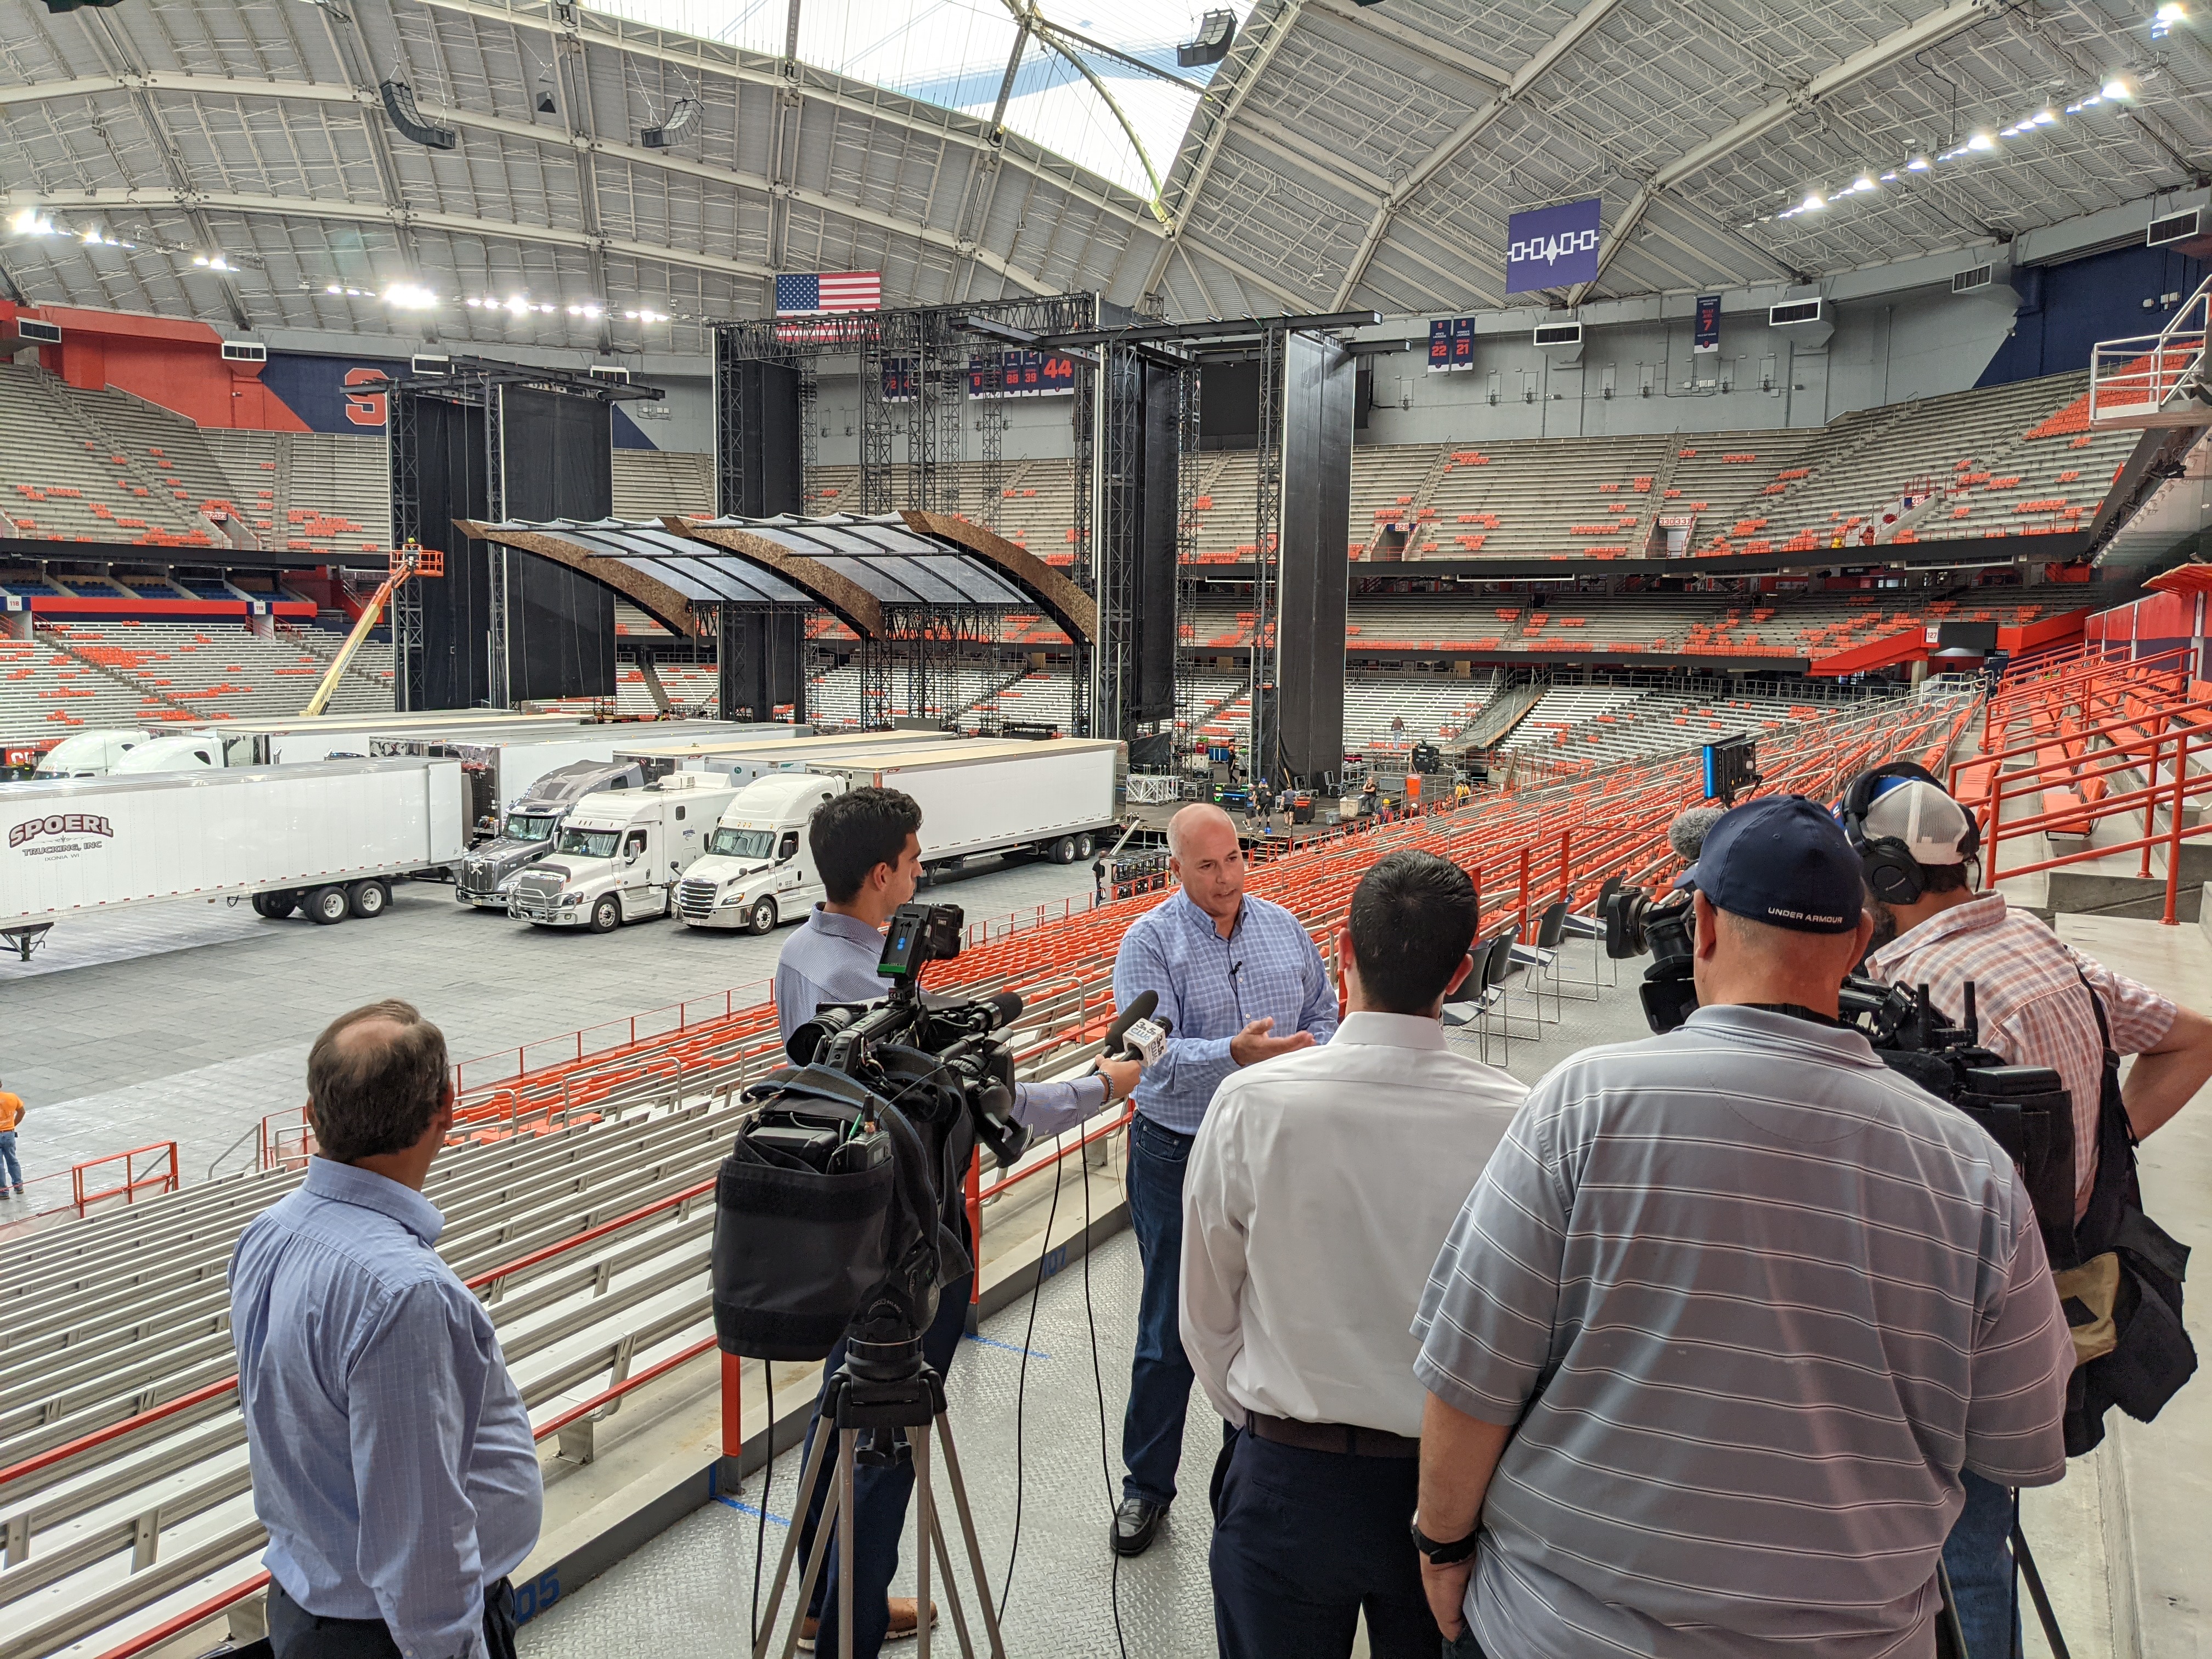 Syracuse Athletics Set to Launch JMA Wireless Dome Re-Seat Plan - Syracuse  University Athletics